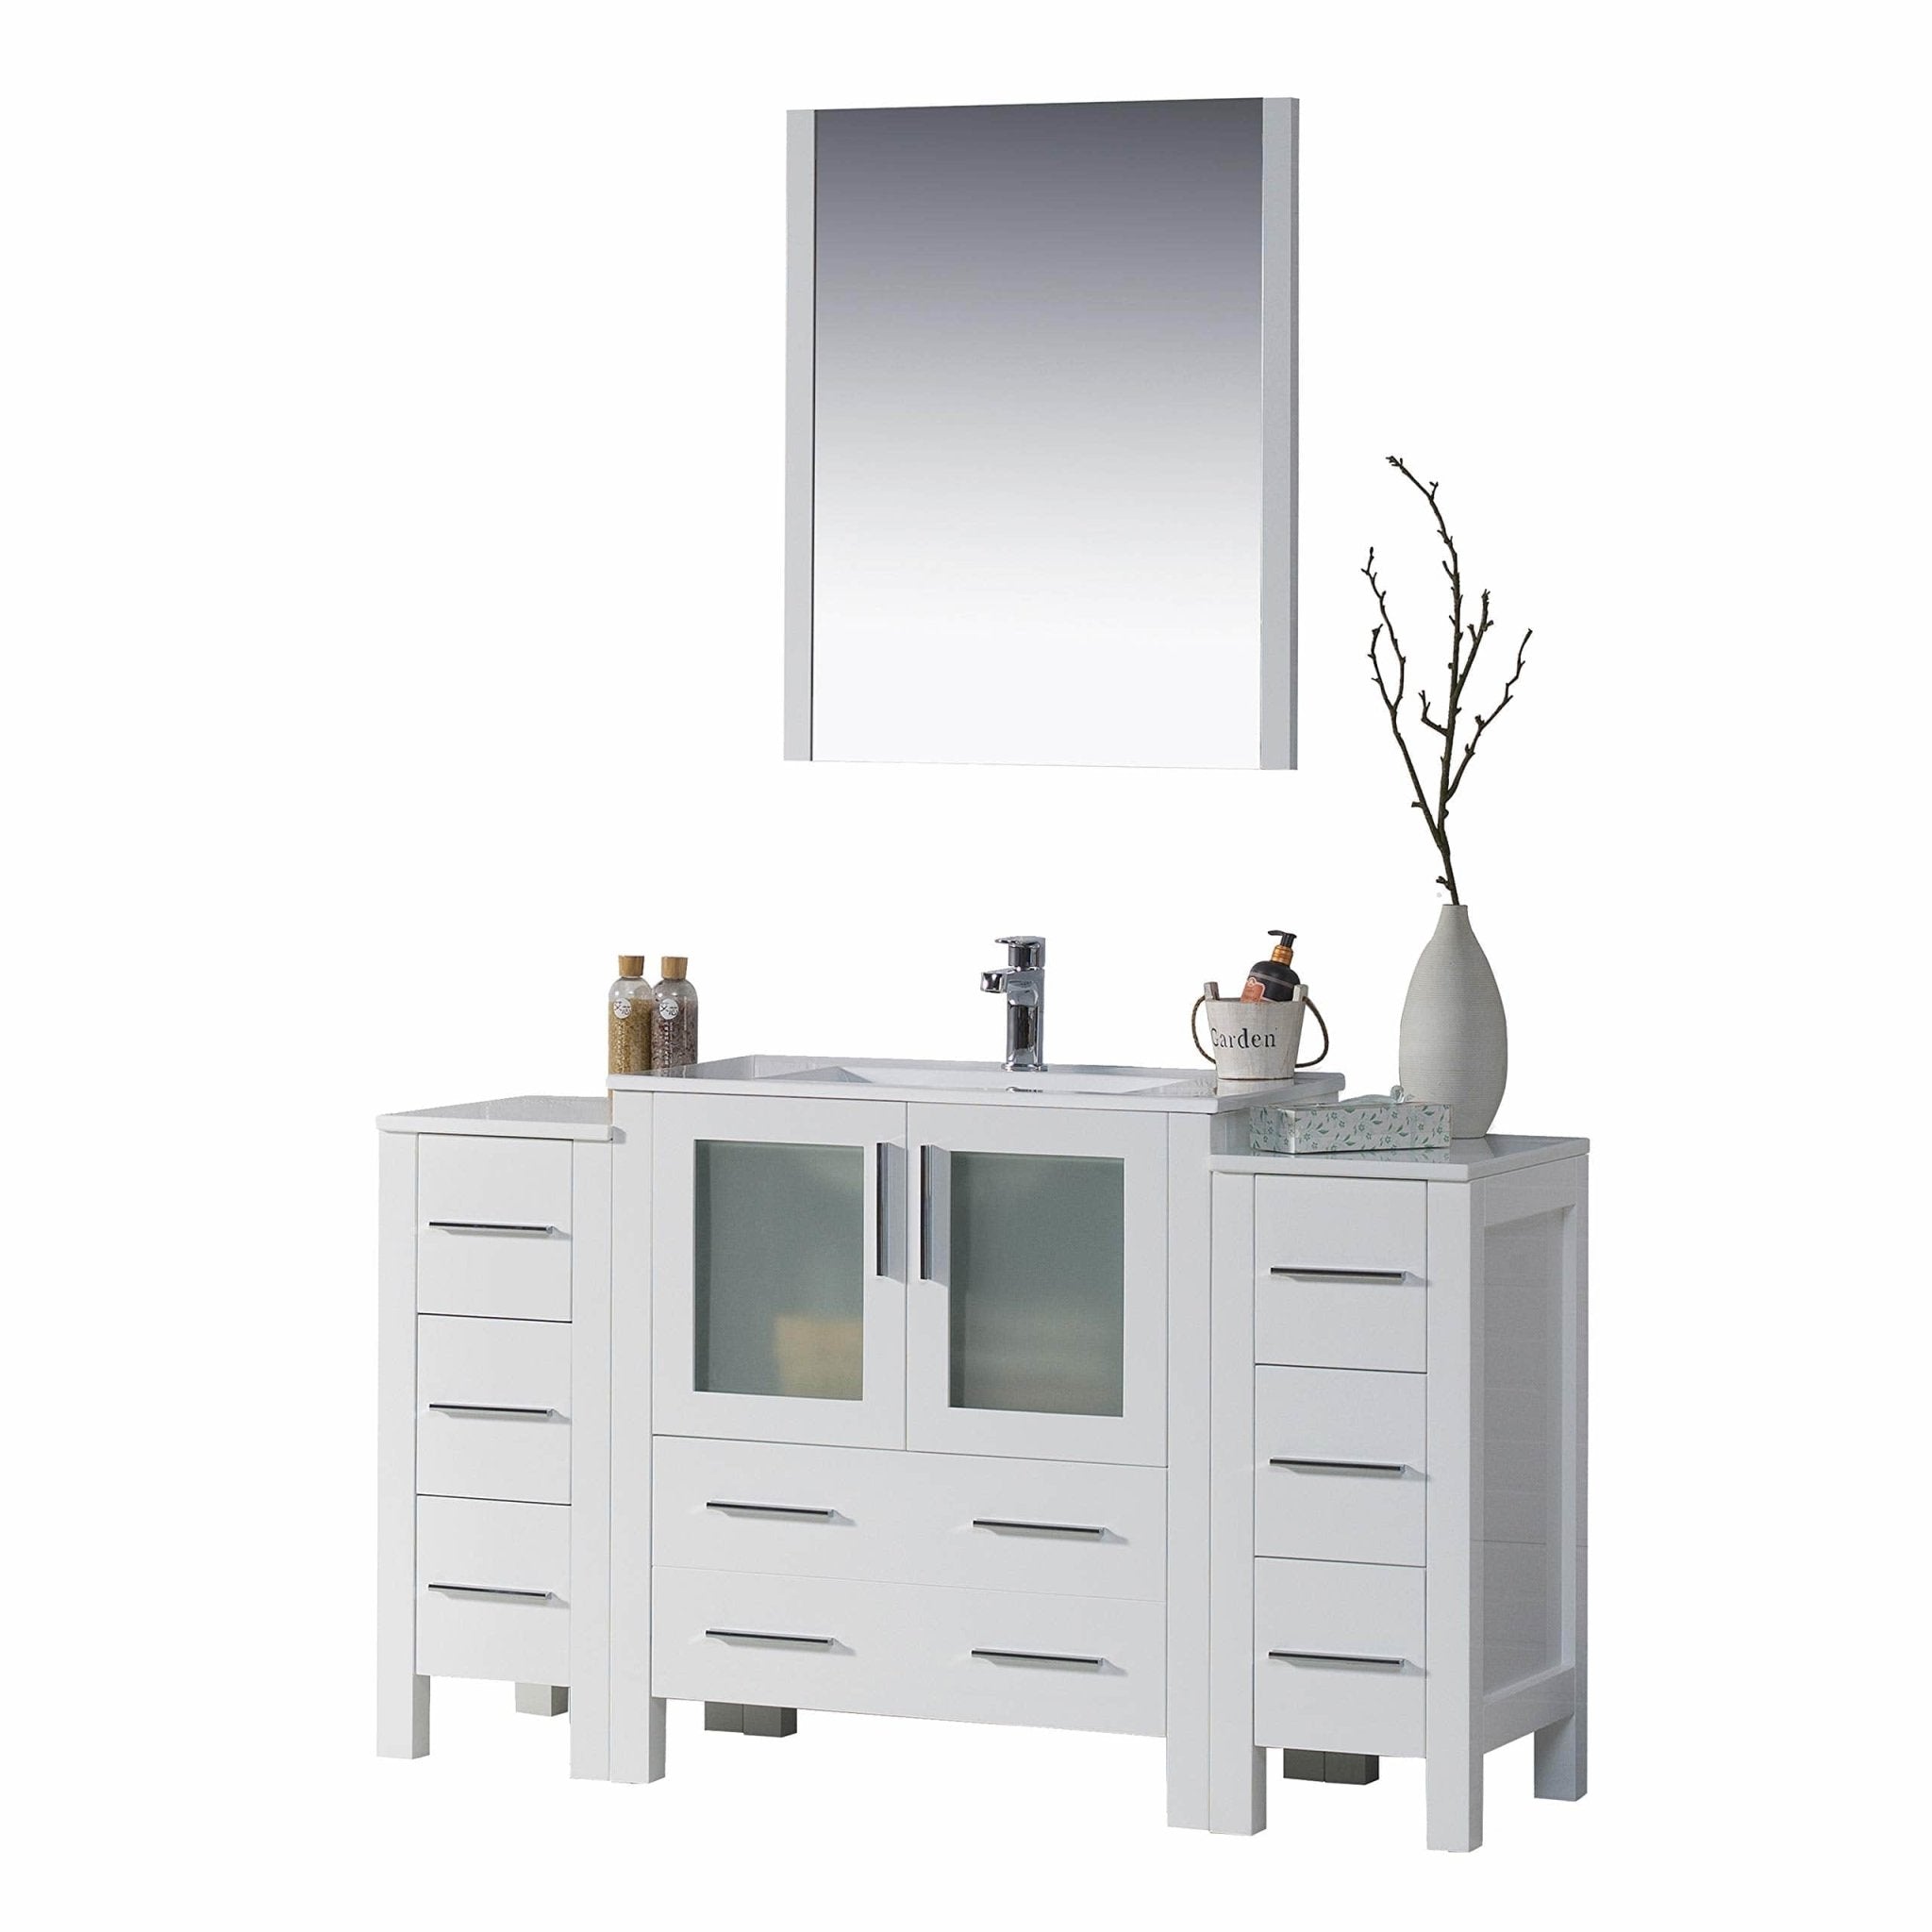 Sydney - 54 Inch Vanity with Ceramic Sink & Mirror - White - Molaix842708124851Sydney001 54 01 C M